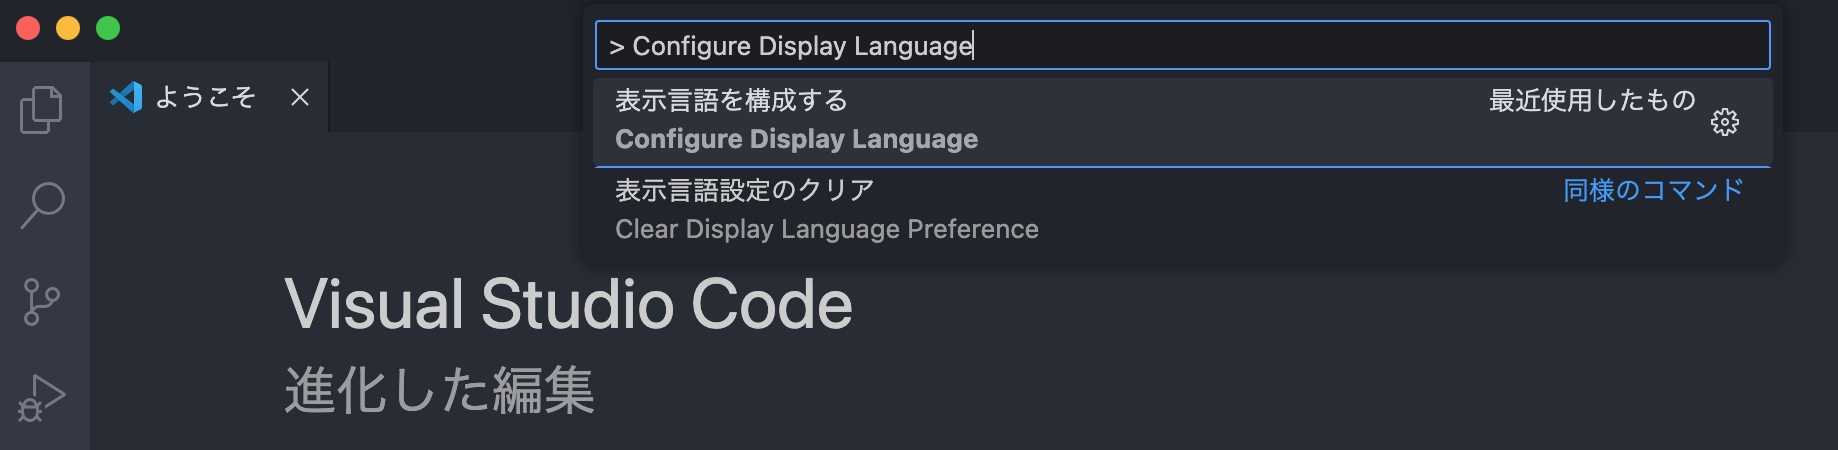 VS Codeのコマンドパレットに、「Configure Display Language」を入力した画面。